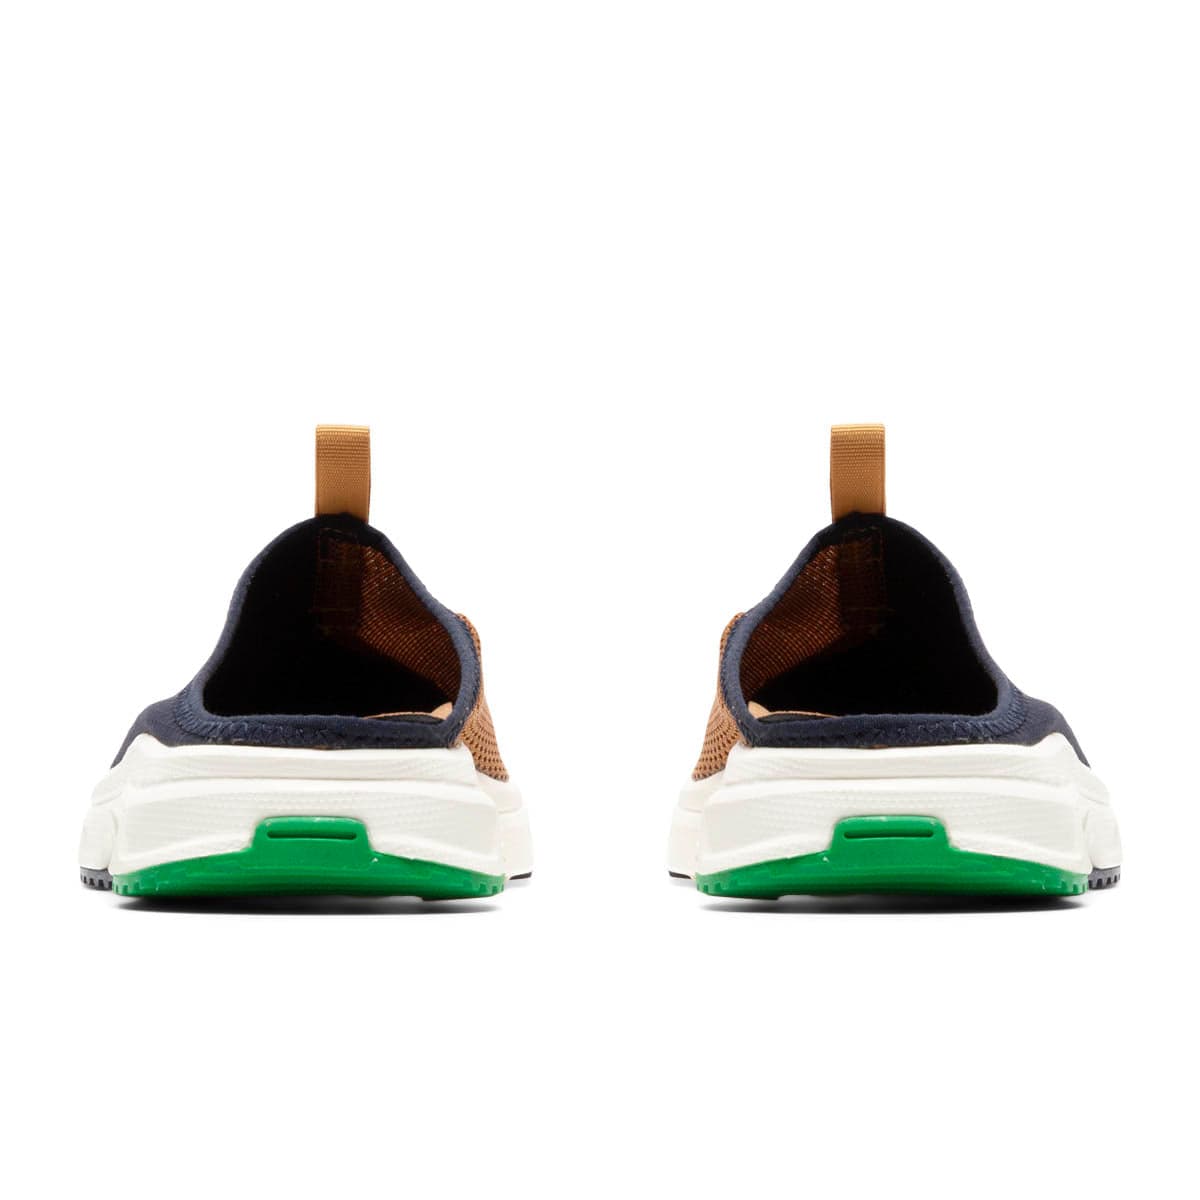 Salomon Sneakers RX SLIDE 3.0